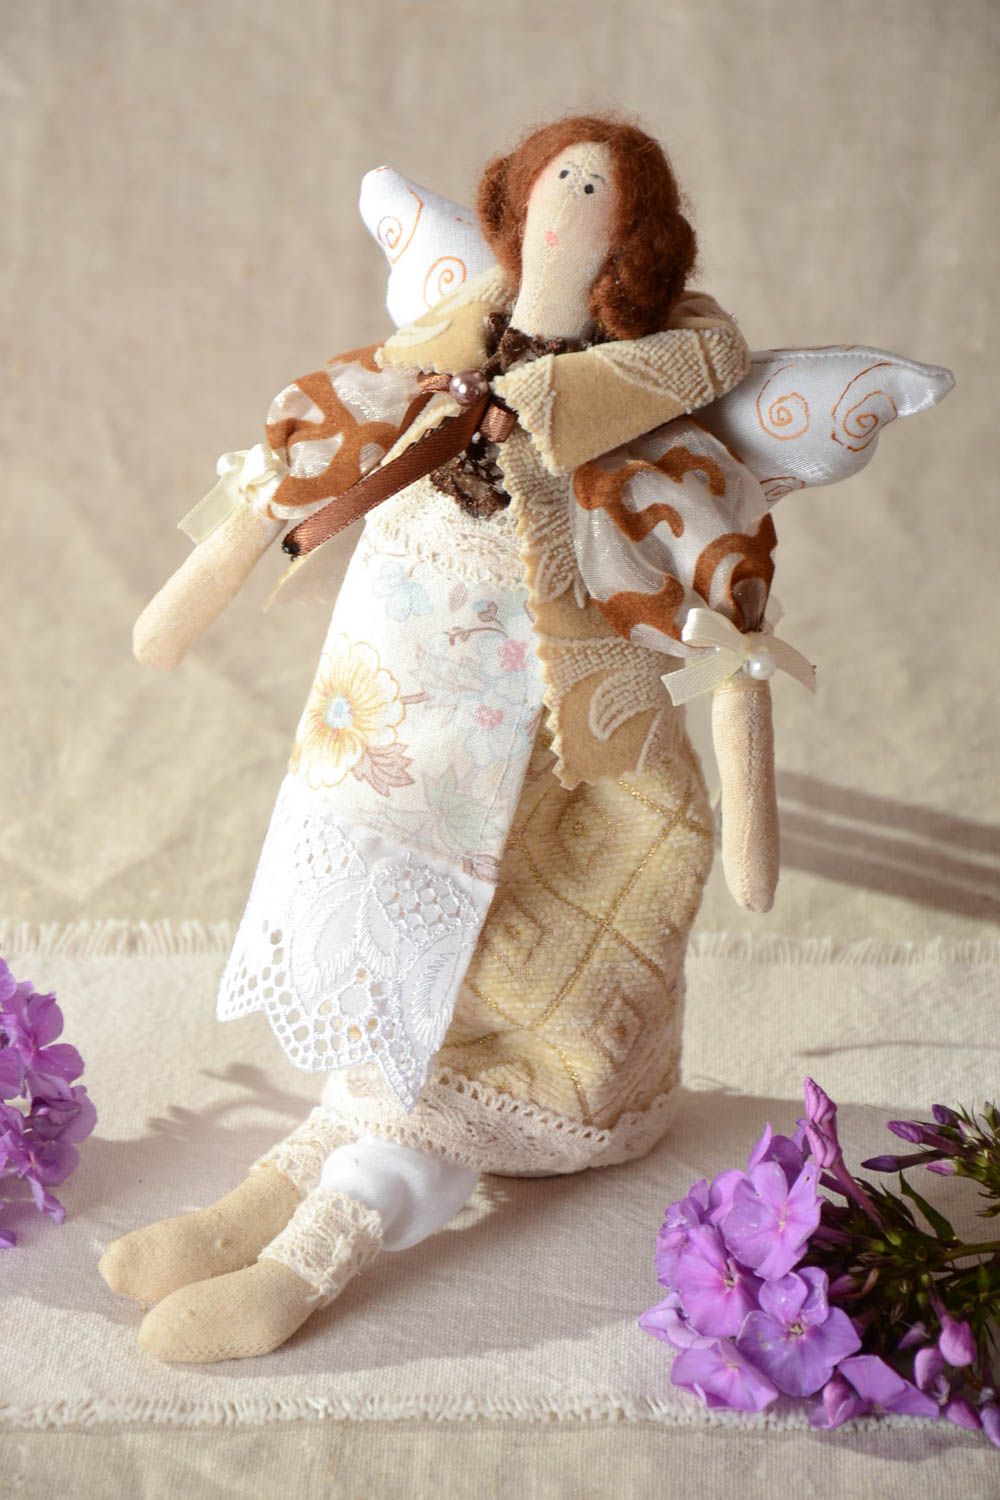 Handmade doll designer doll unusual toy decor ideas gift for girls toy decor photo 1